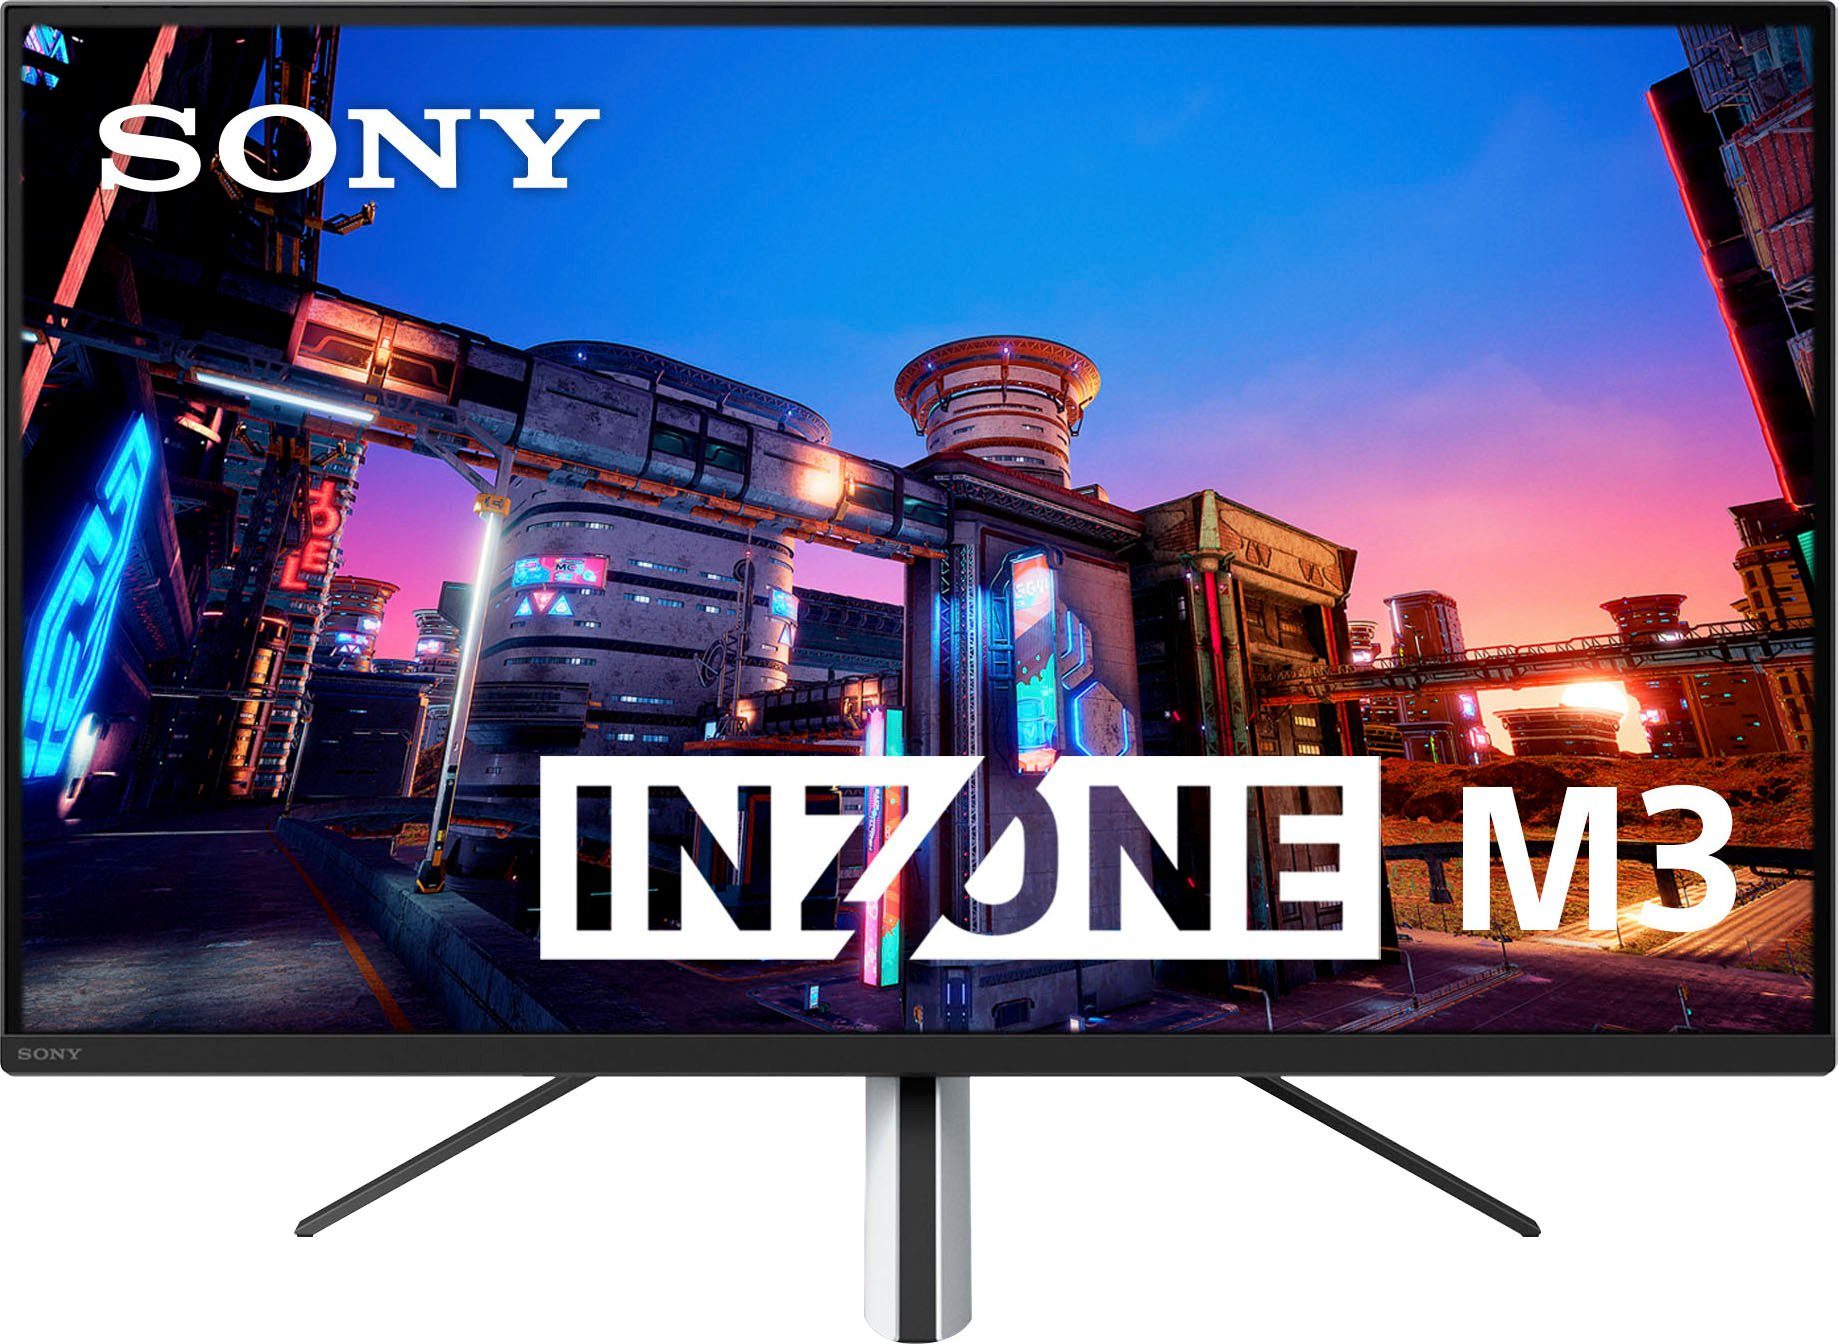 Sony INZONE M3 Gaming-Monitor (69 cm/27 